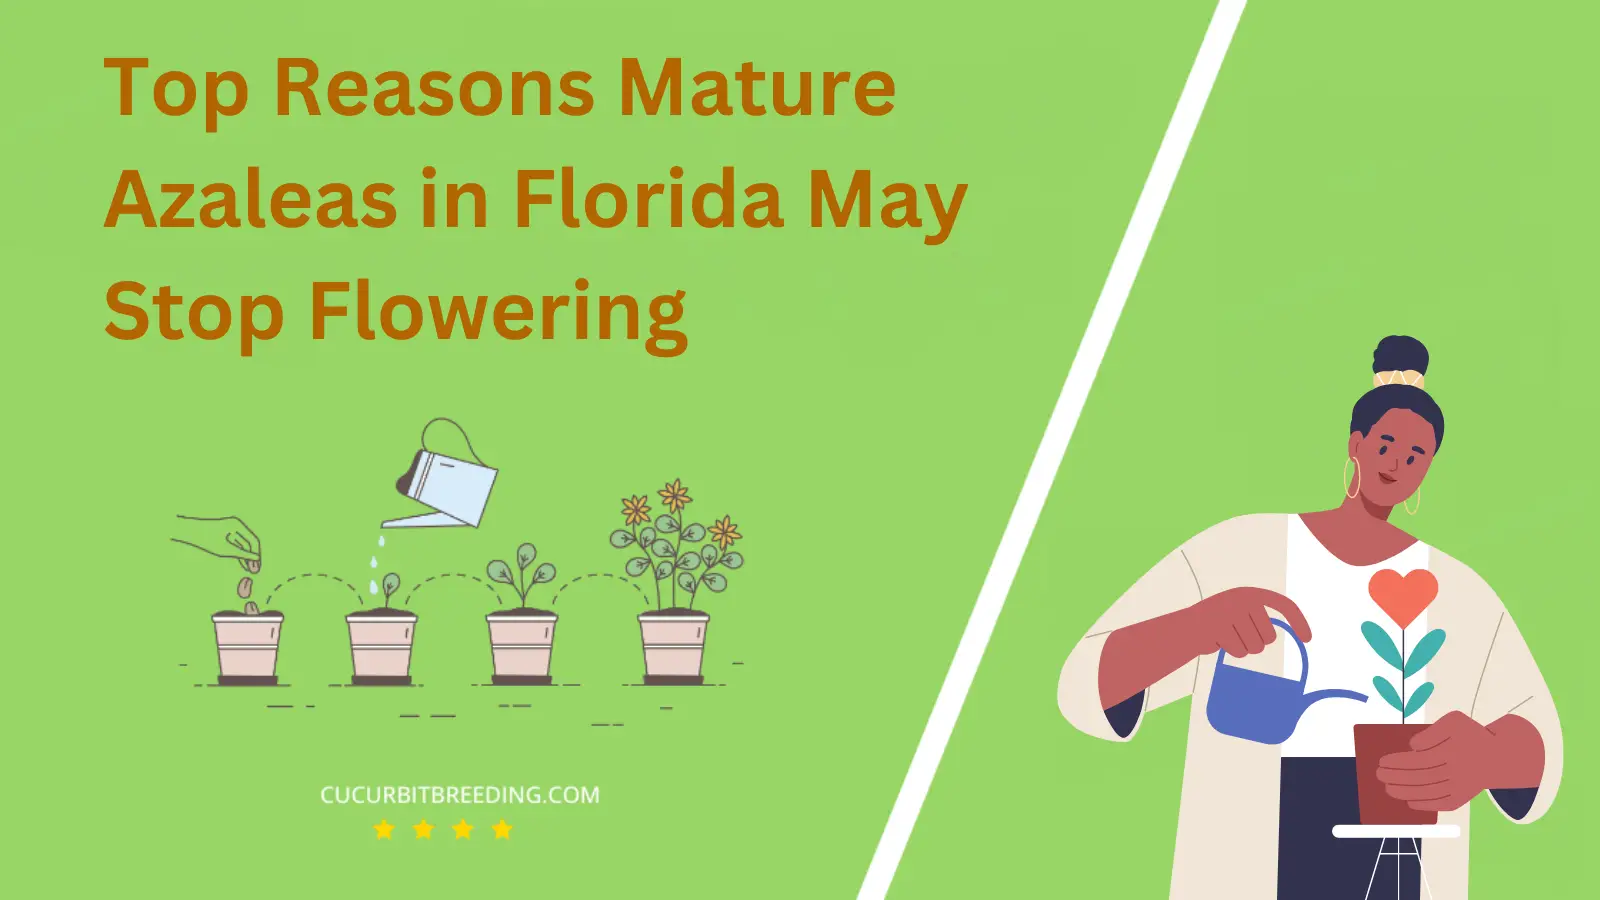 Top Reasons Mature Azaleas in Florida May Stop Flowering